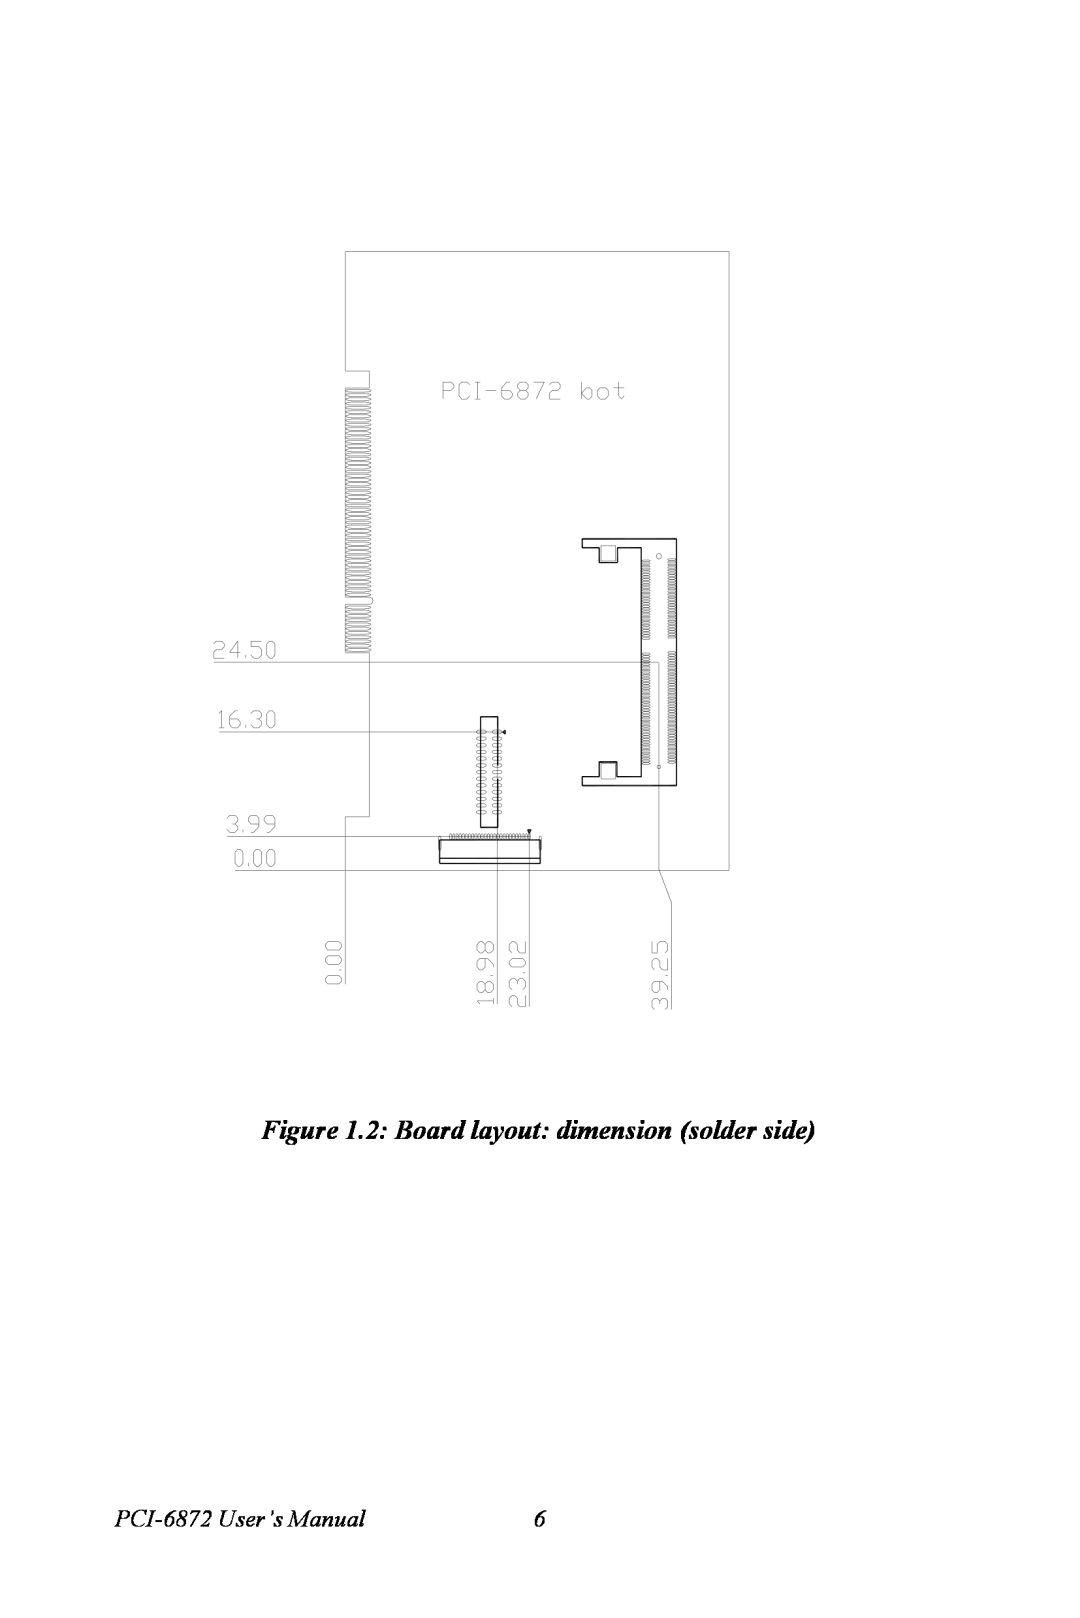 Advantech user manual 2 Board layout dimension solder side, PCI-6872 User’s Manual 